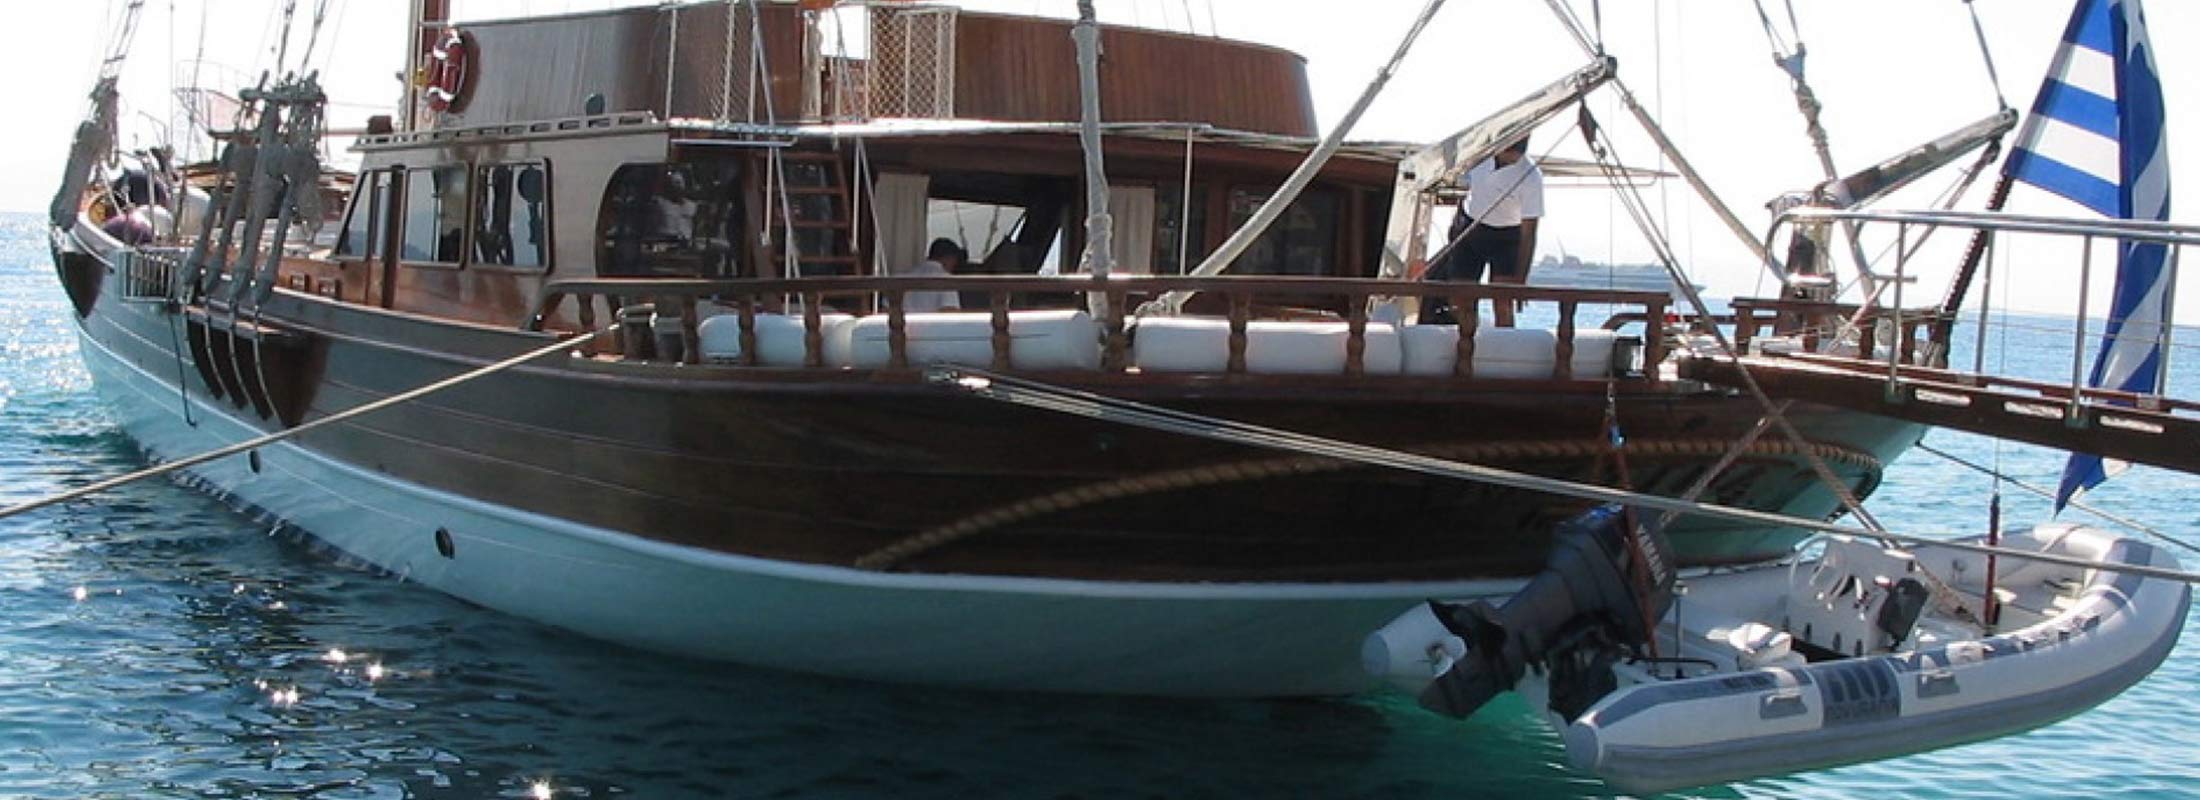 Matina Sailing Yacht for Charter Mediterranean slider 2